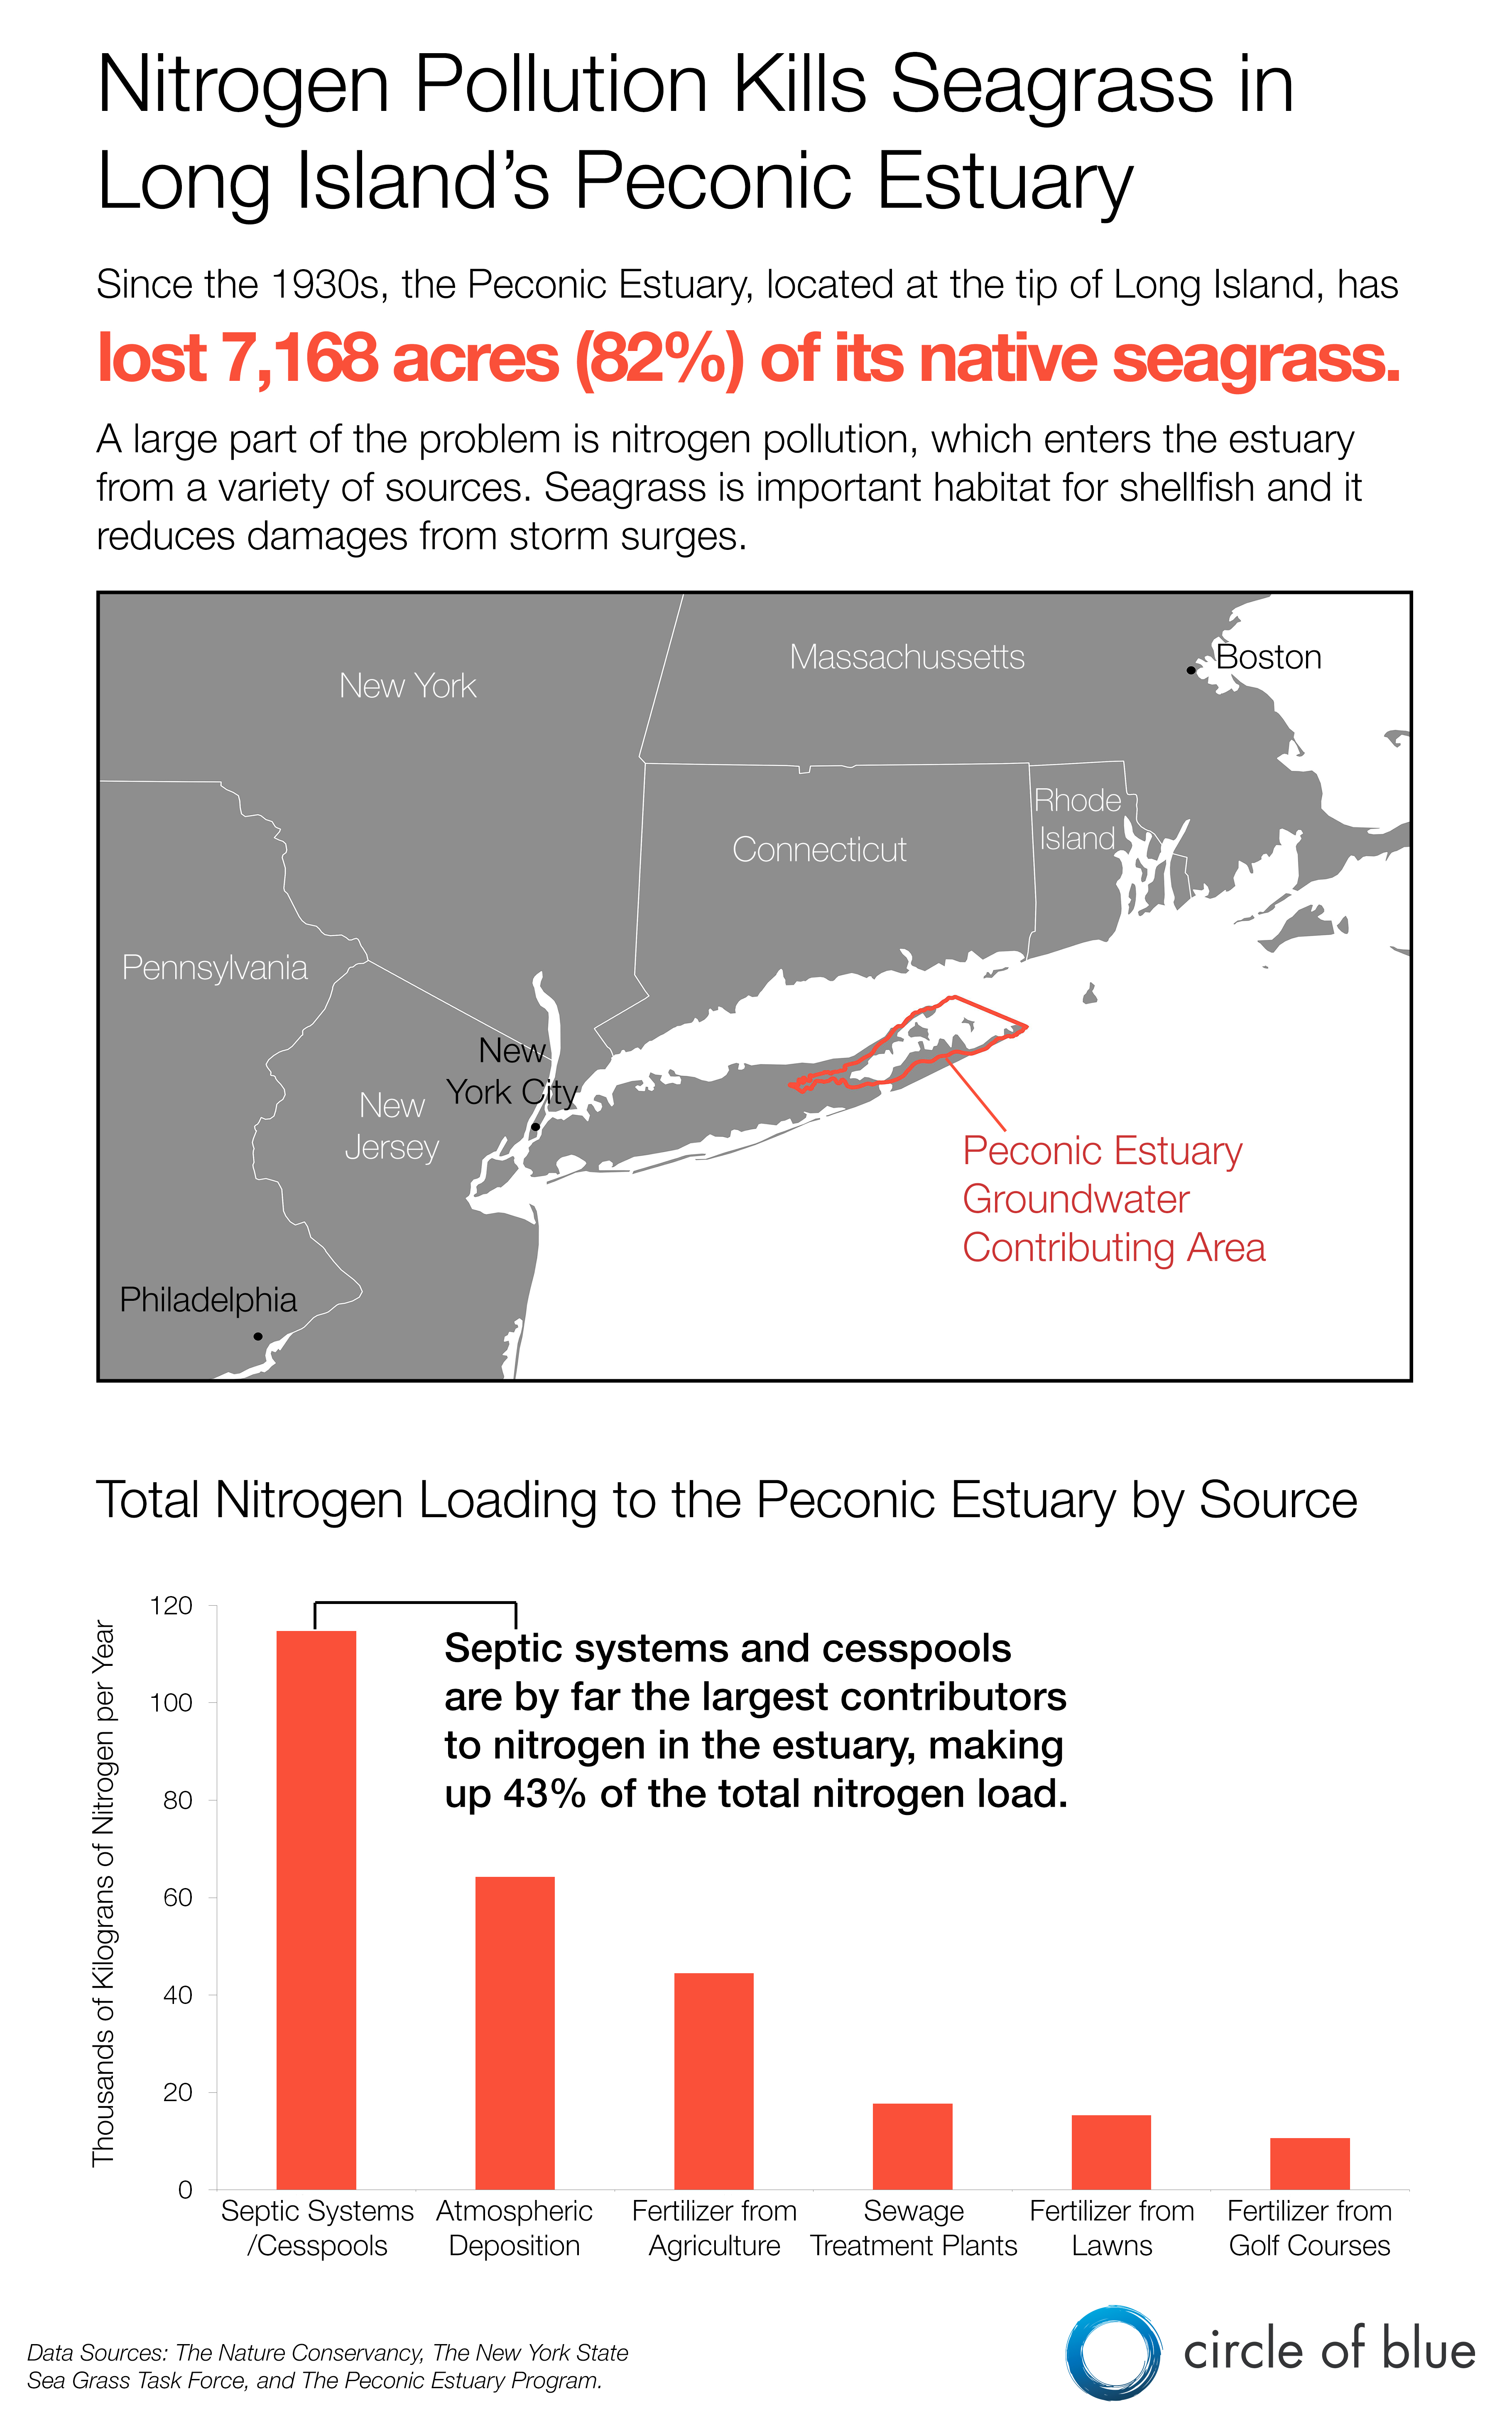 Peconic Bay Long Island seagrass toxic algae nitrogen pollution